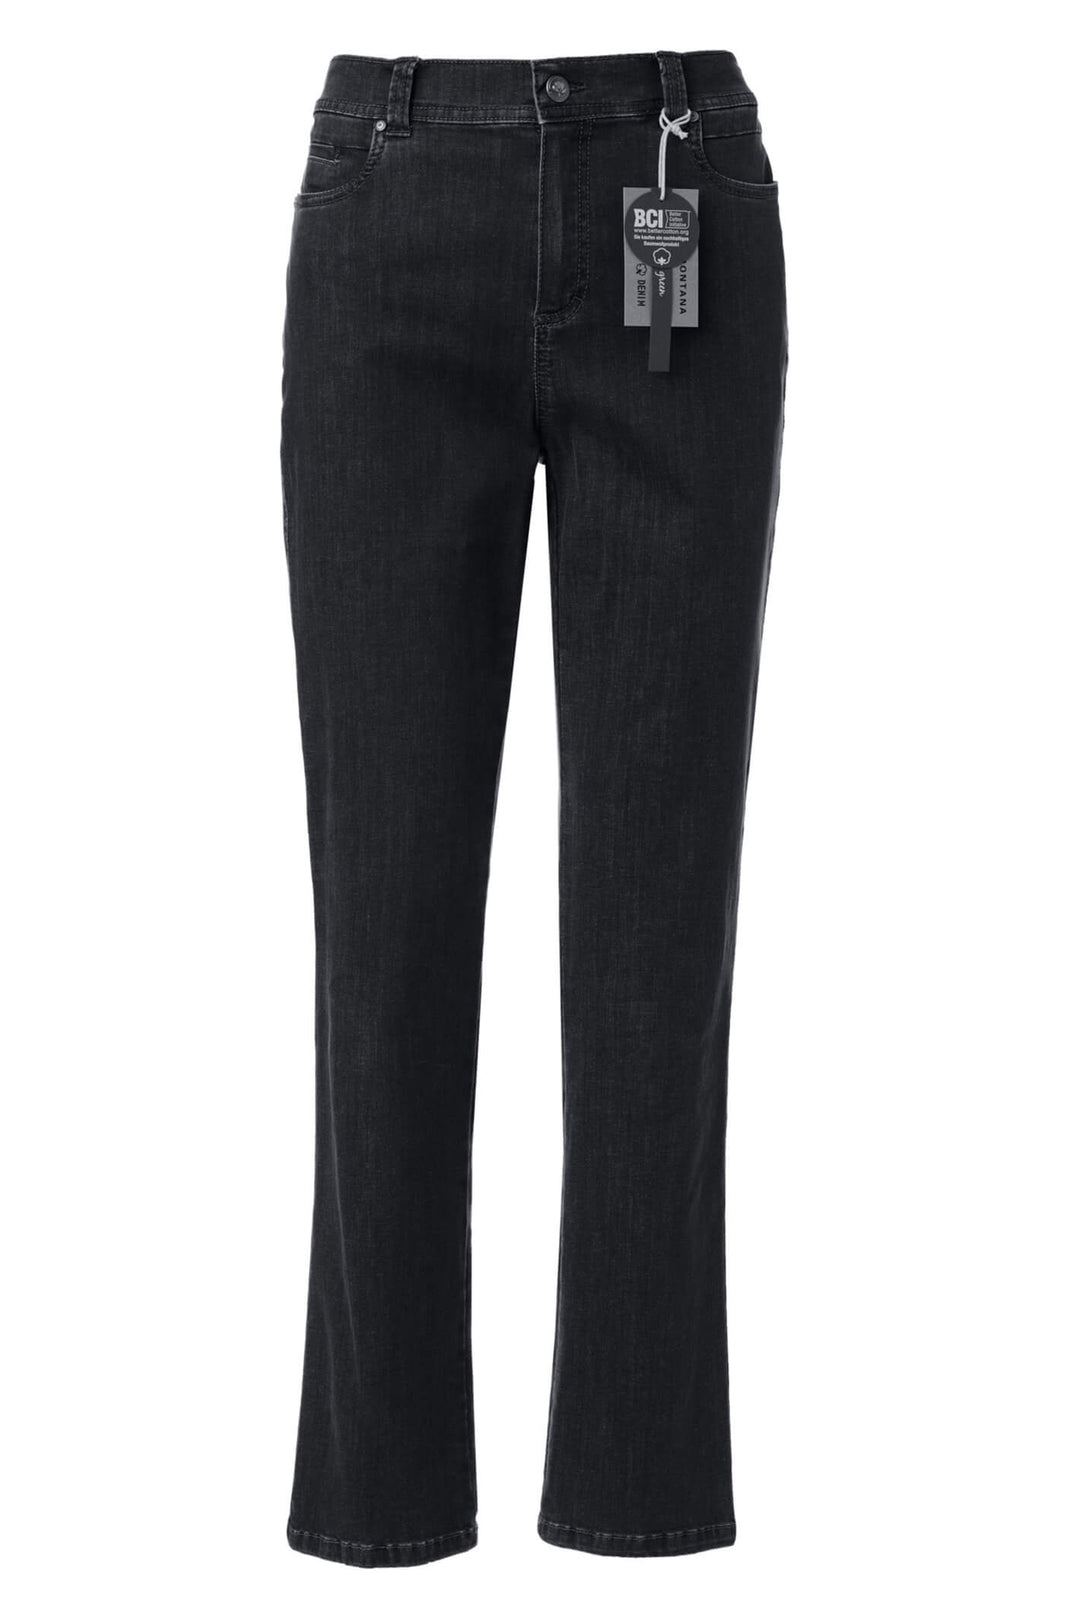 Anna Montana Dora 4196 Black 1 Comfort Fit Jeans - Shirley Allum Boutique